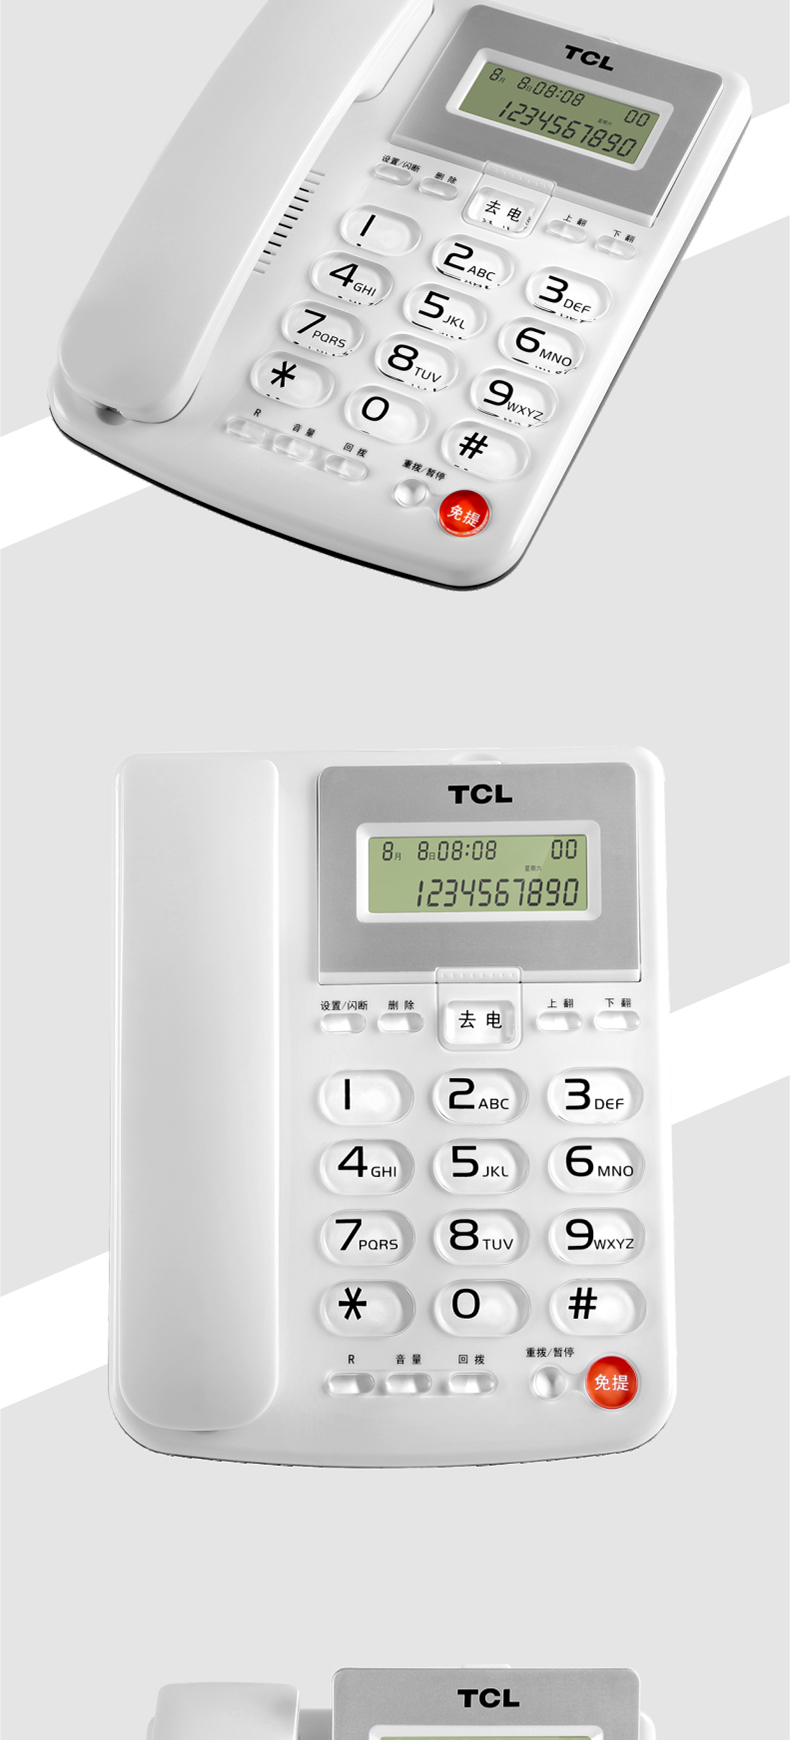 TCL电话机 HCD868(165)TSD 双接口 红色